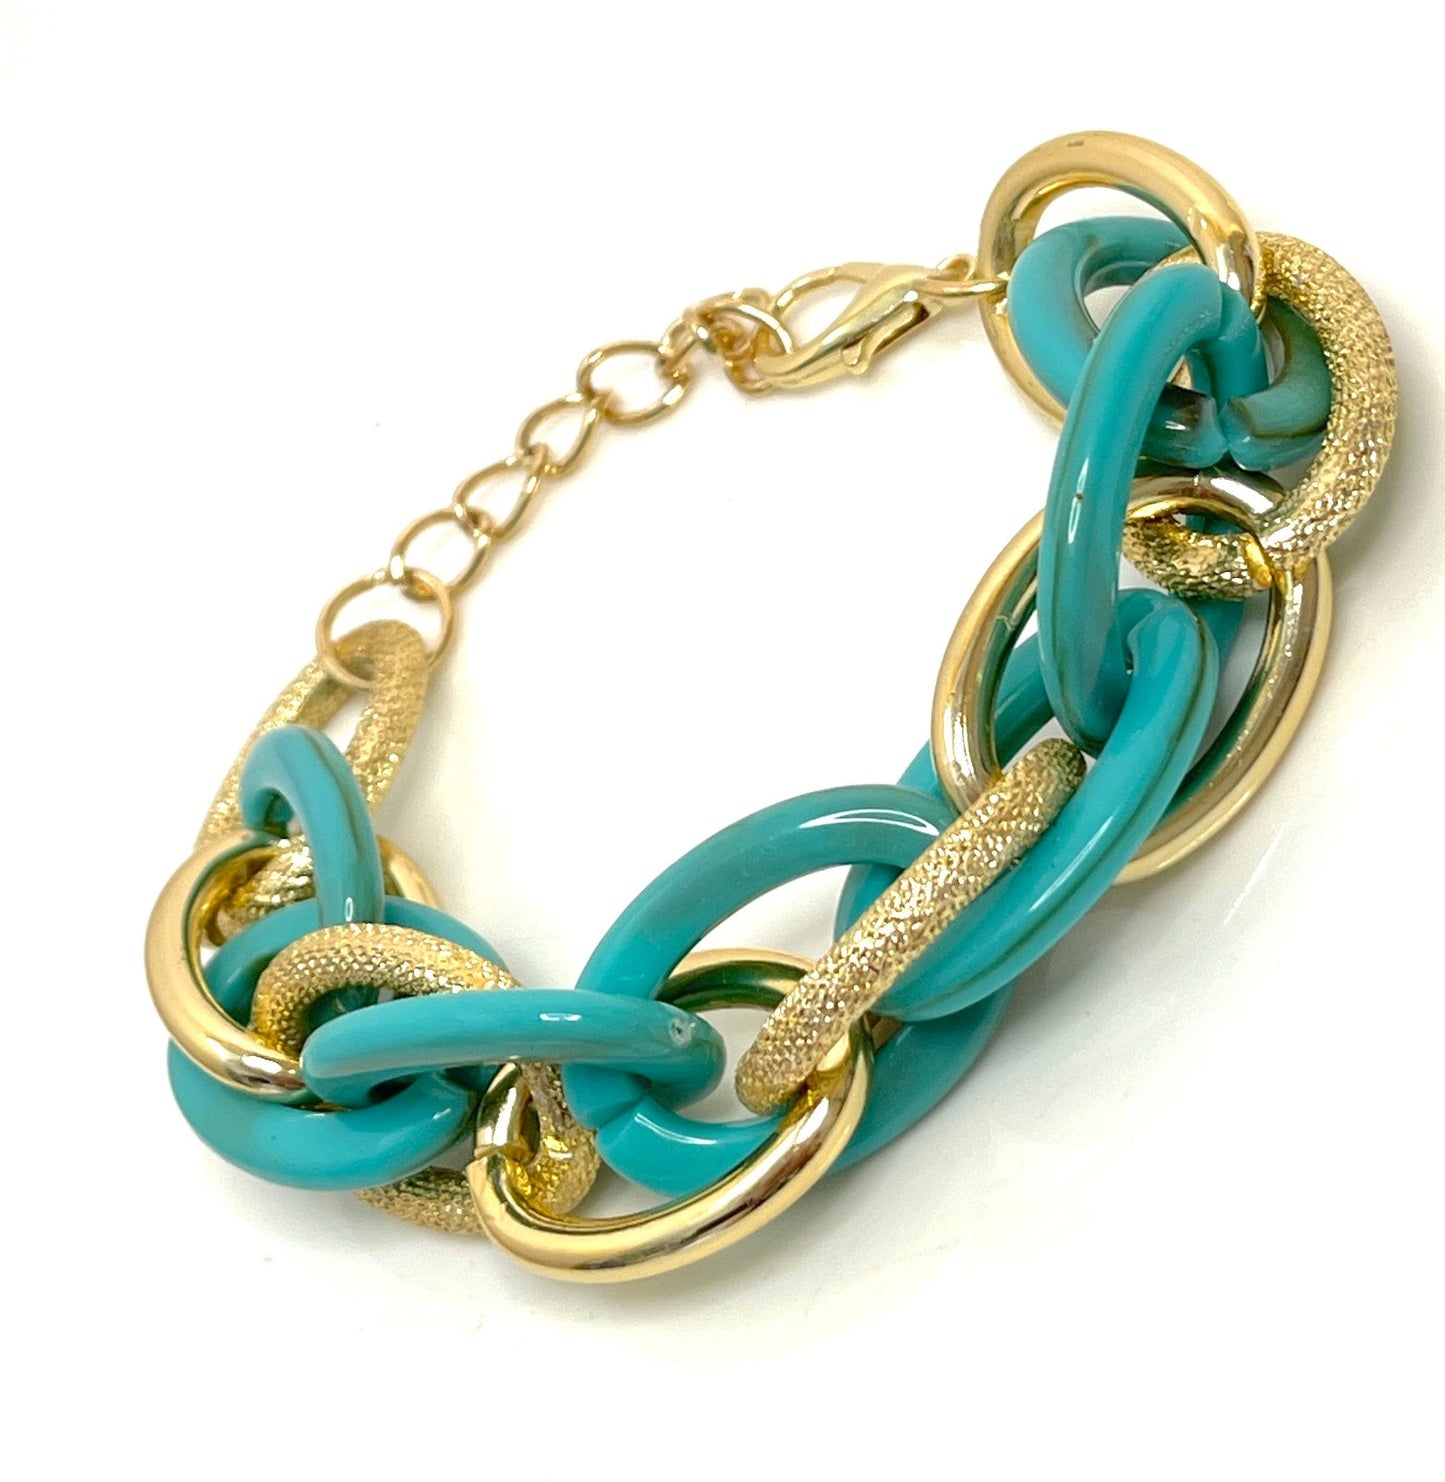 Teal Gold Chunky Chain Bracelet | Statement Bracelet | Retro Acrylic Jewellery